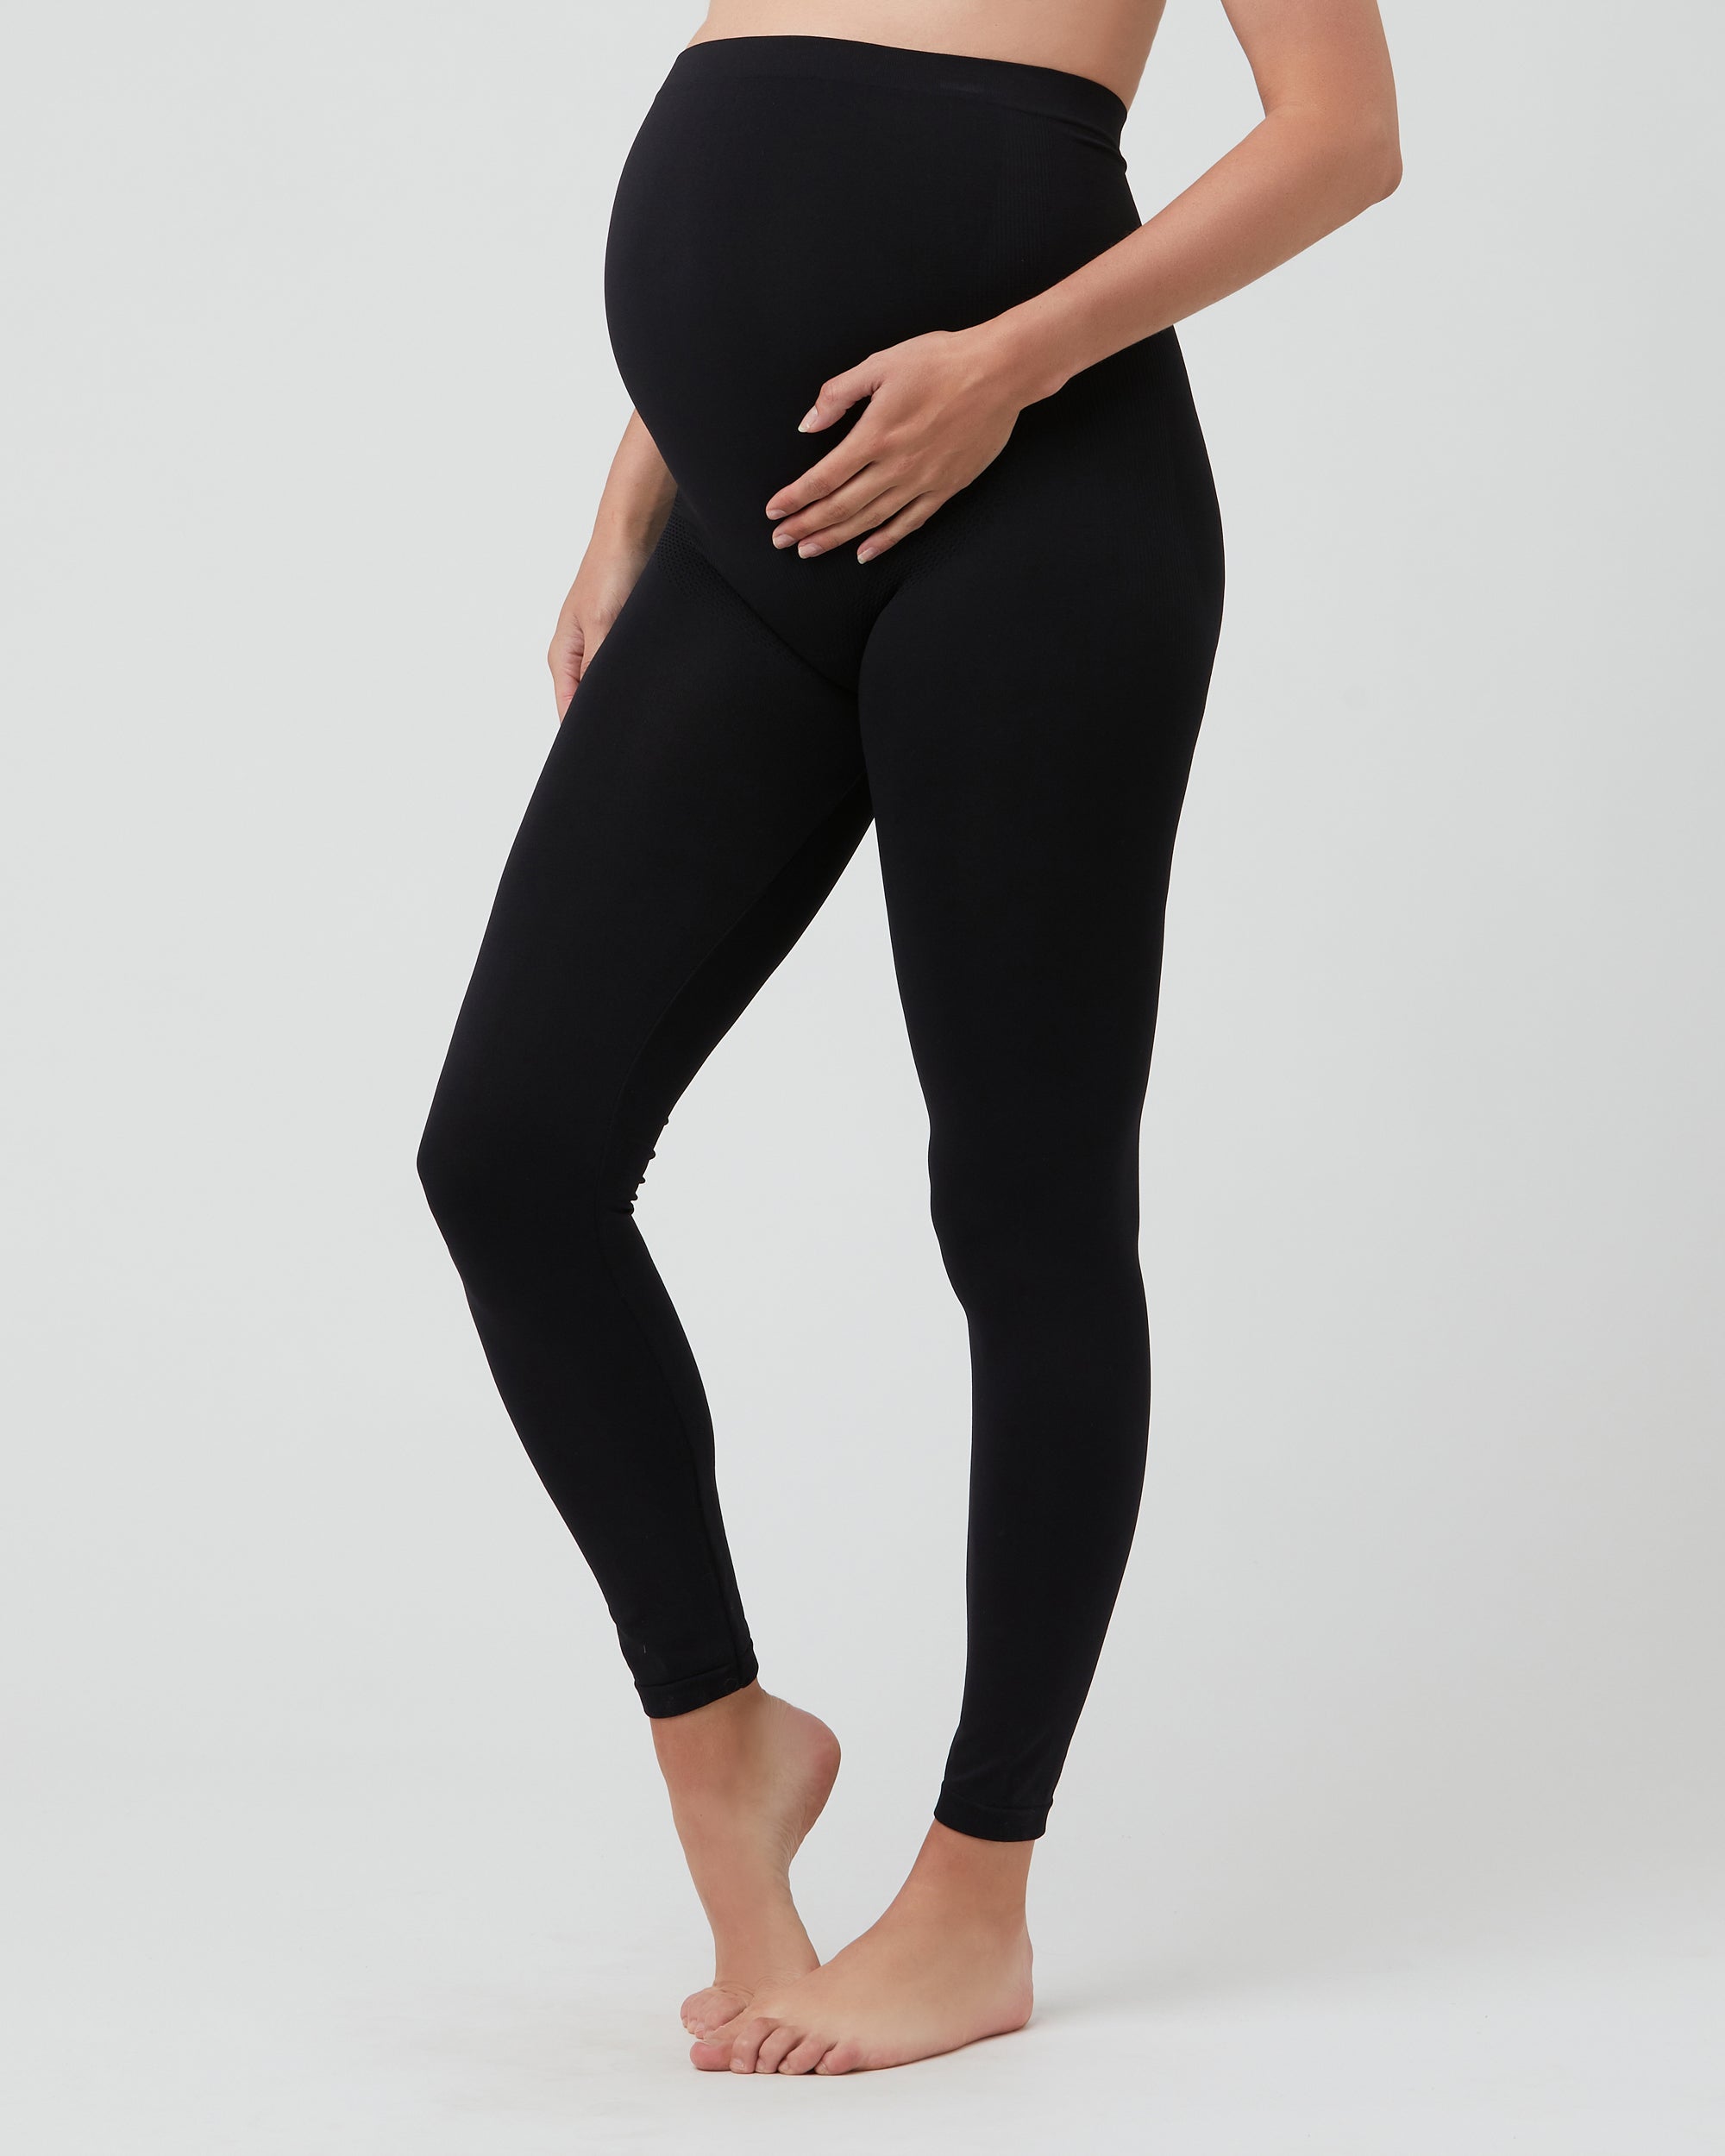 Buy Maternity Pants Online India